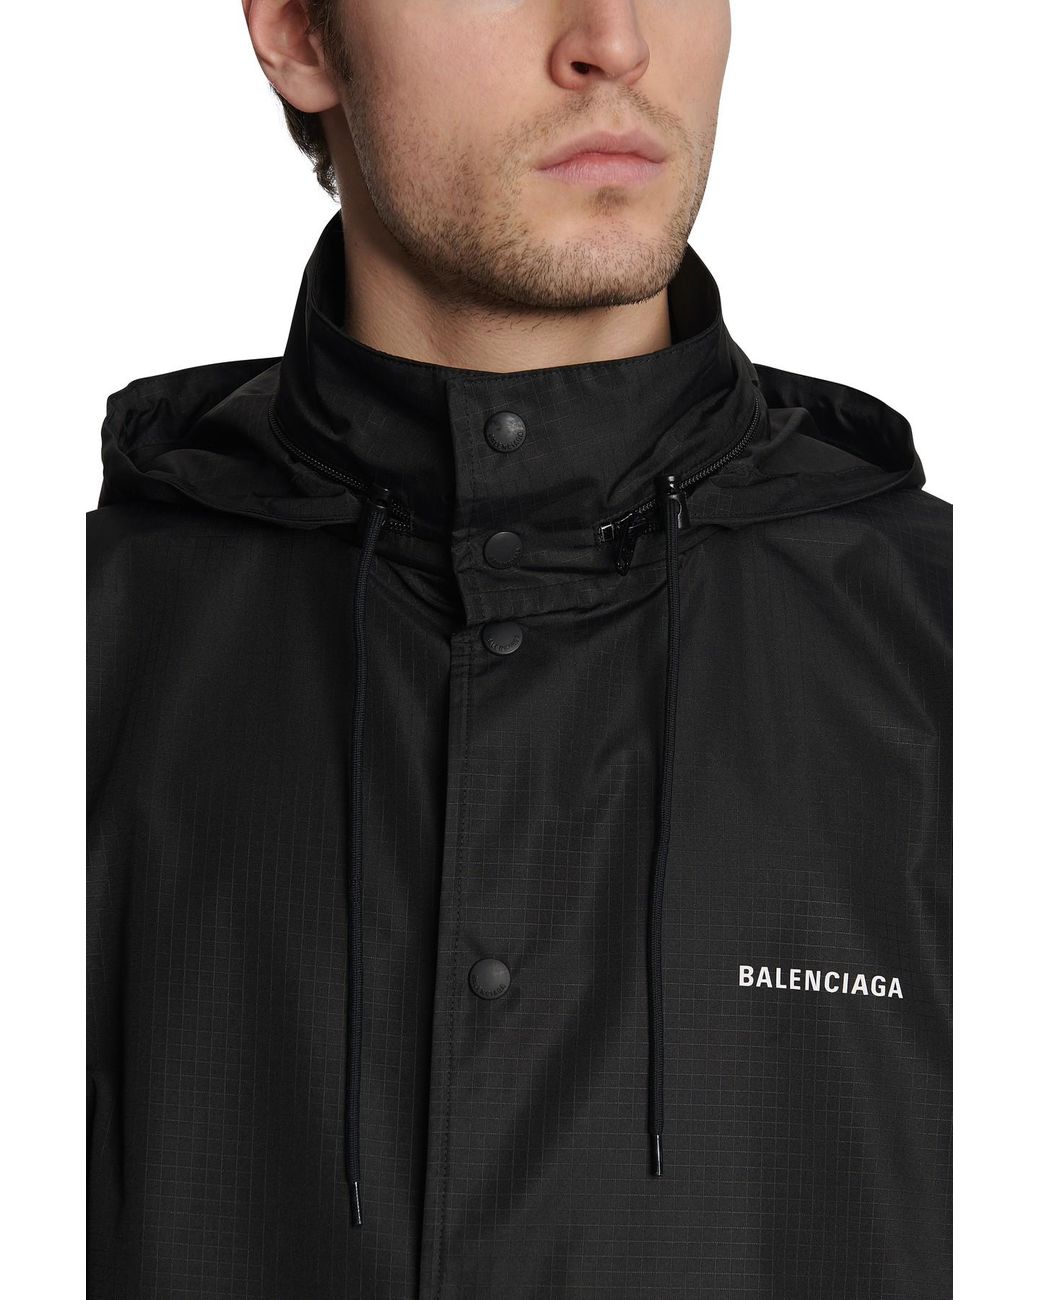 Balenciaga World Food Programme Raincoat in Black for Men | Lyst